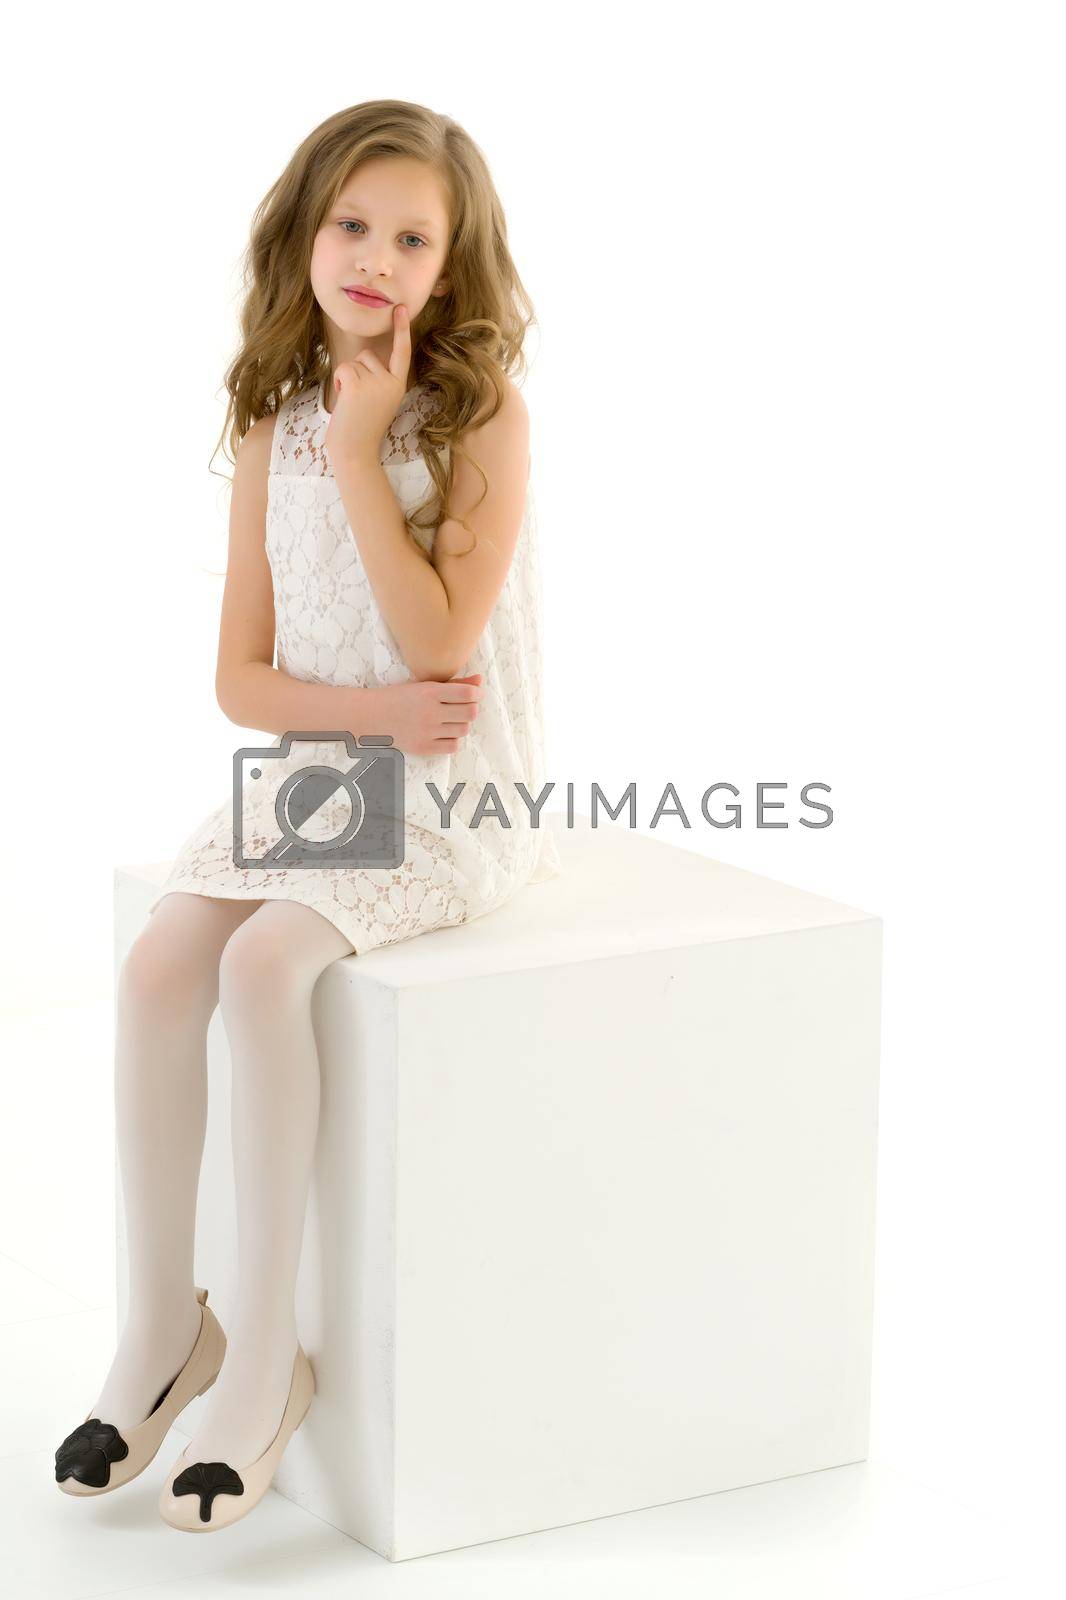 Royalty free image of Girl in Elegant Ivory Dress Sitting on White Cube in Studio by kolesnikov_studio